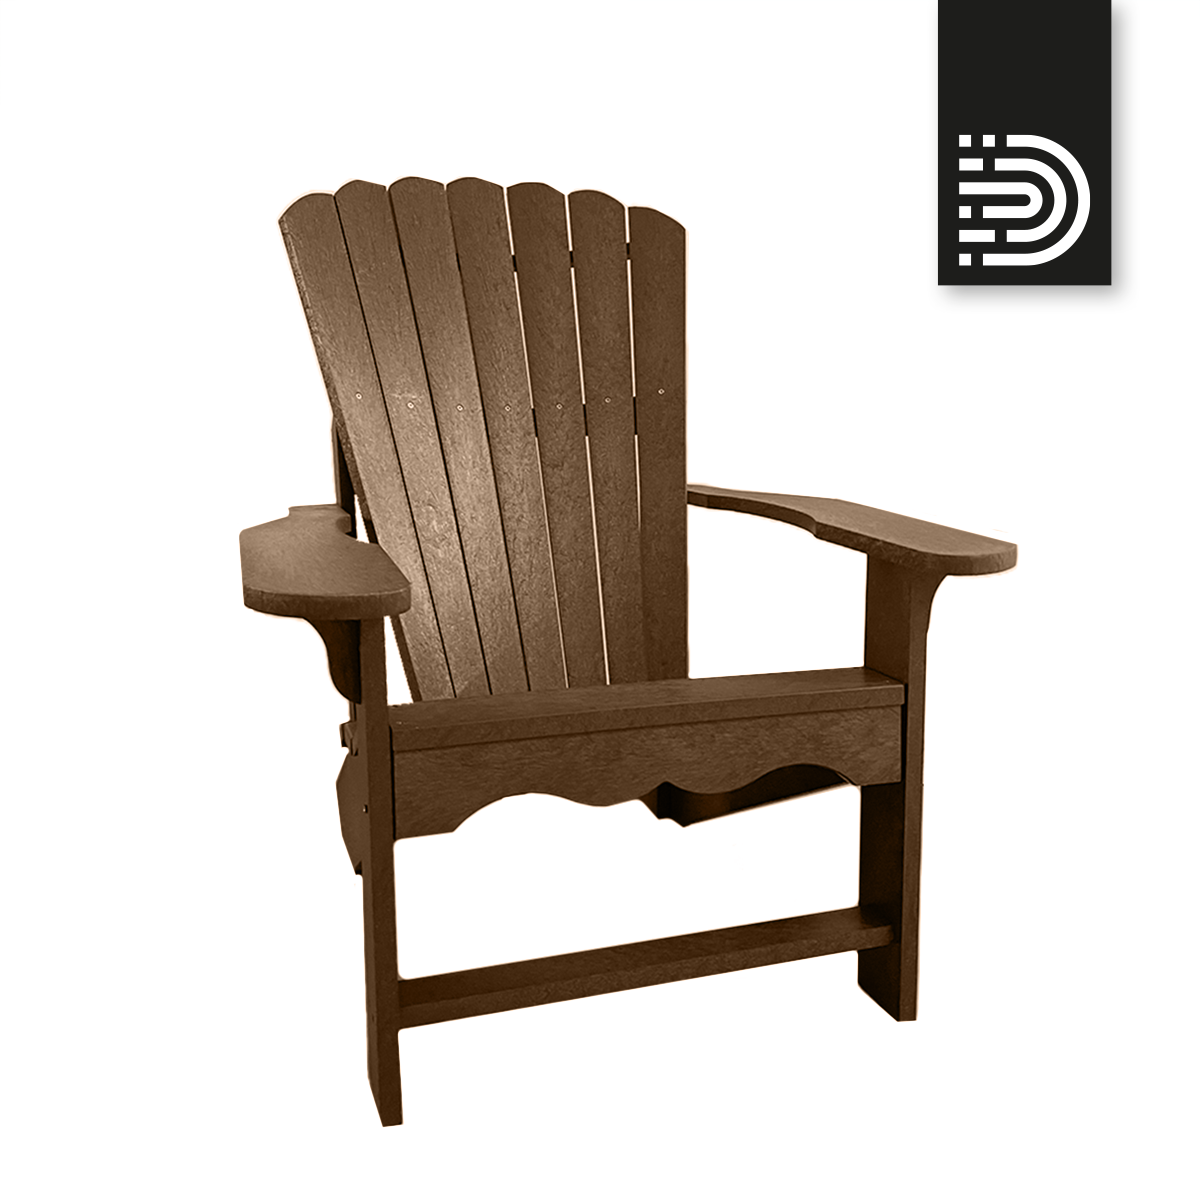 CAPCX07 Classic Adirondack Chair - Expresso 46